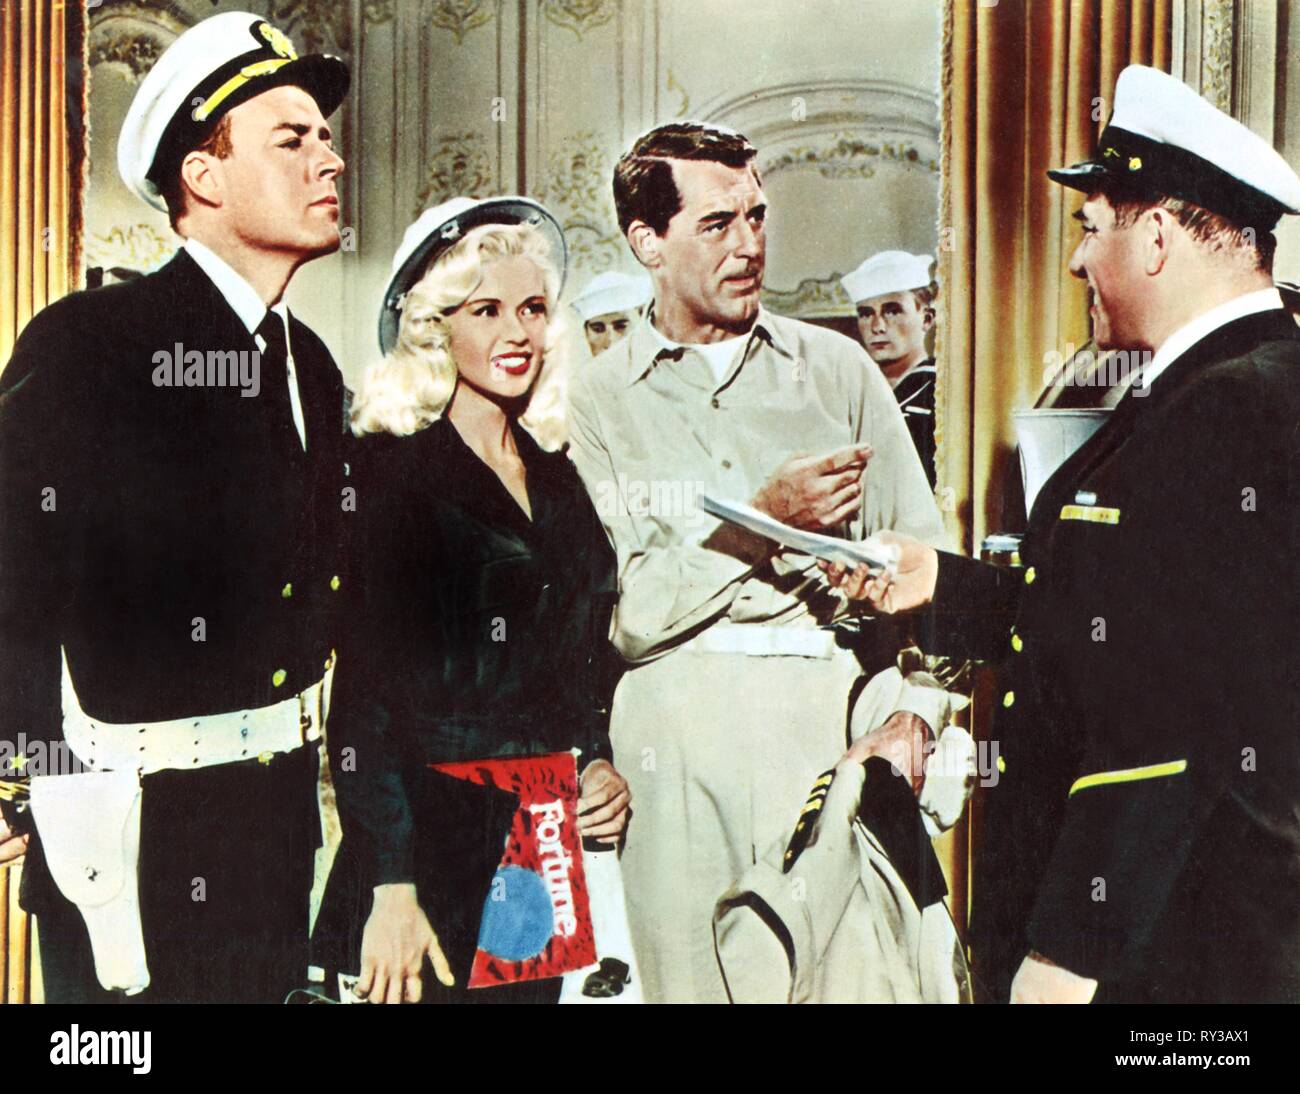 MULLANEY,MANSFIELD,GRANT,KLEMPERER, embrasse-LES POUR MOI, 1957 Banque D'Images